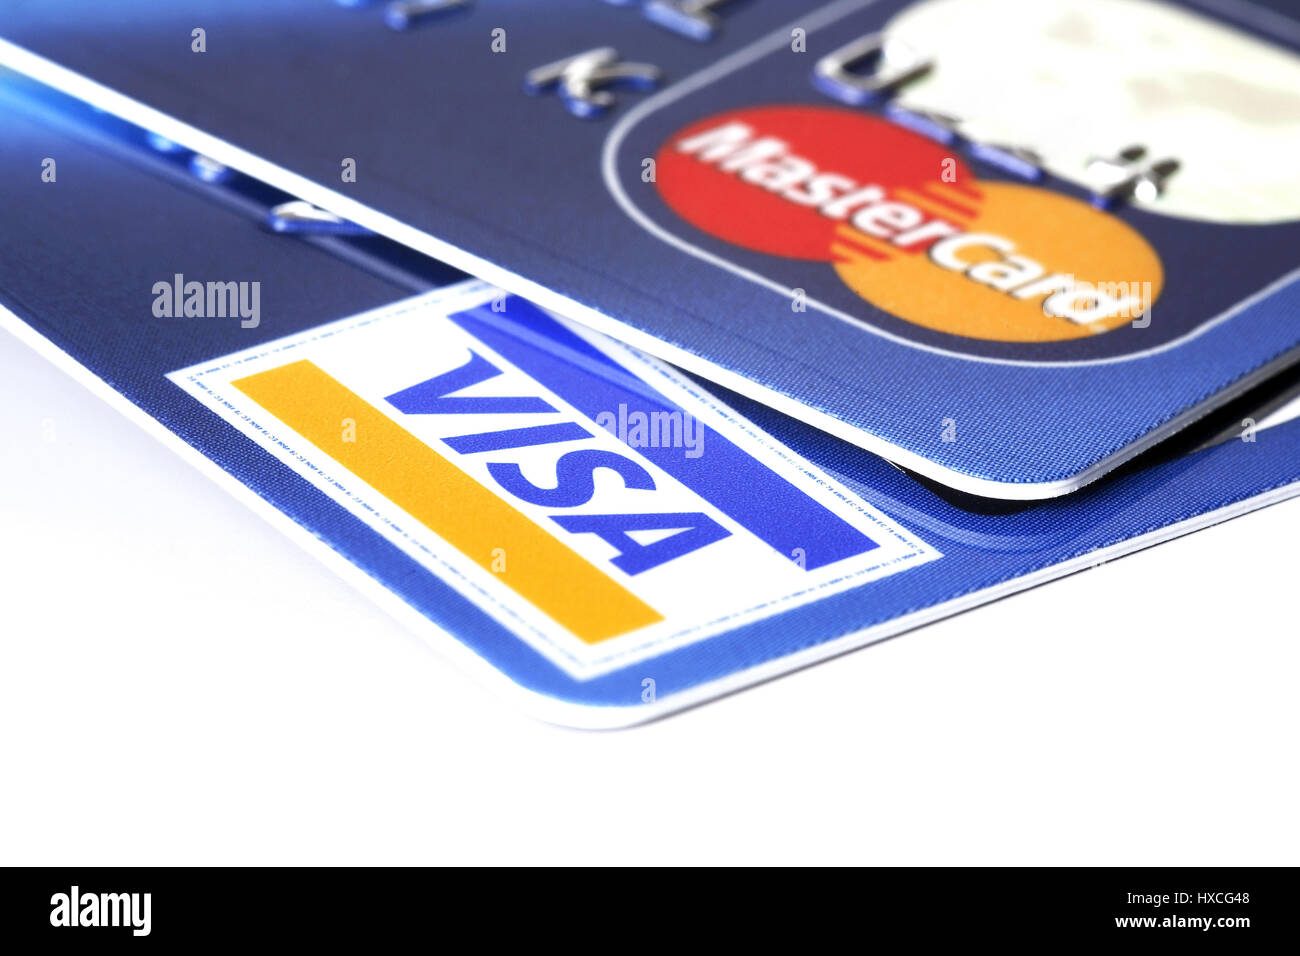 Credit card, Kreditkarte Stock Photo